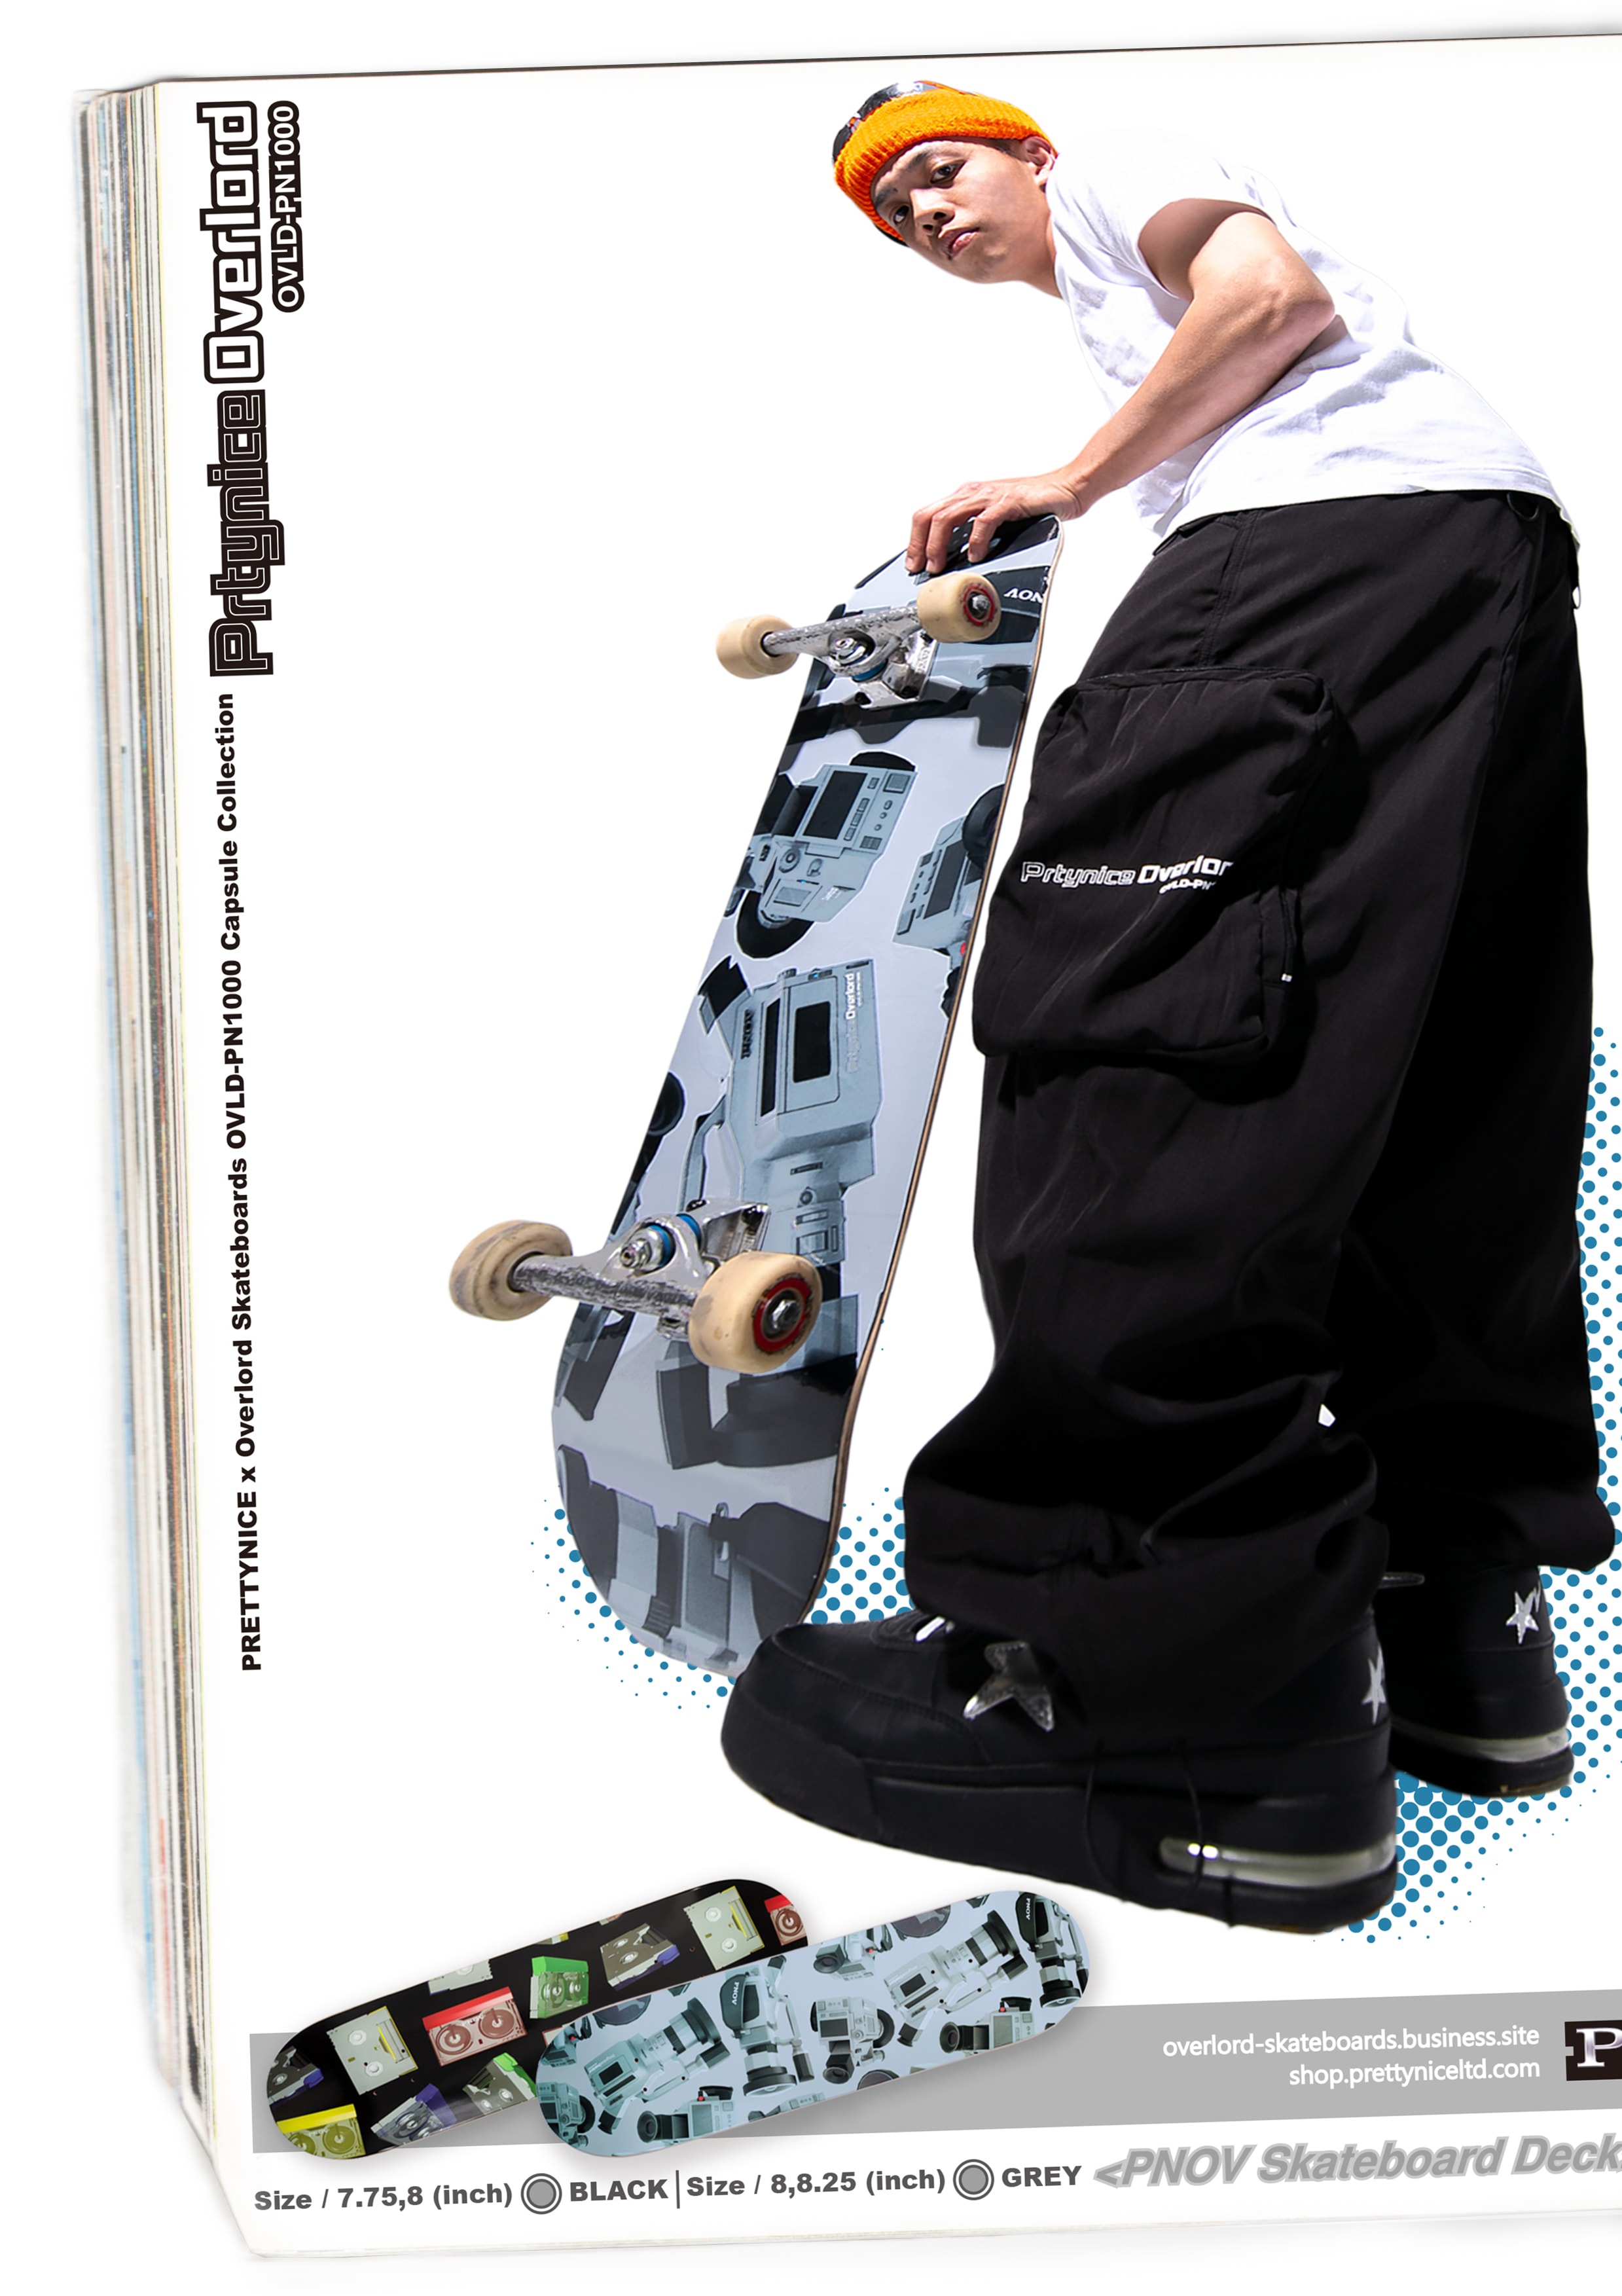 PRETTYNICE x Overlord Skateboards 全新聯名 Lookbook 發布